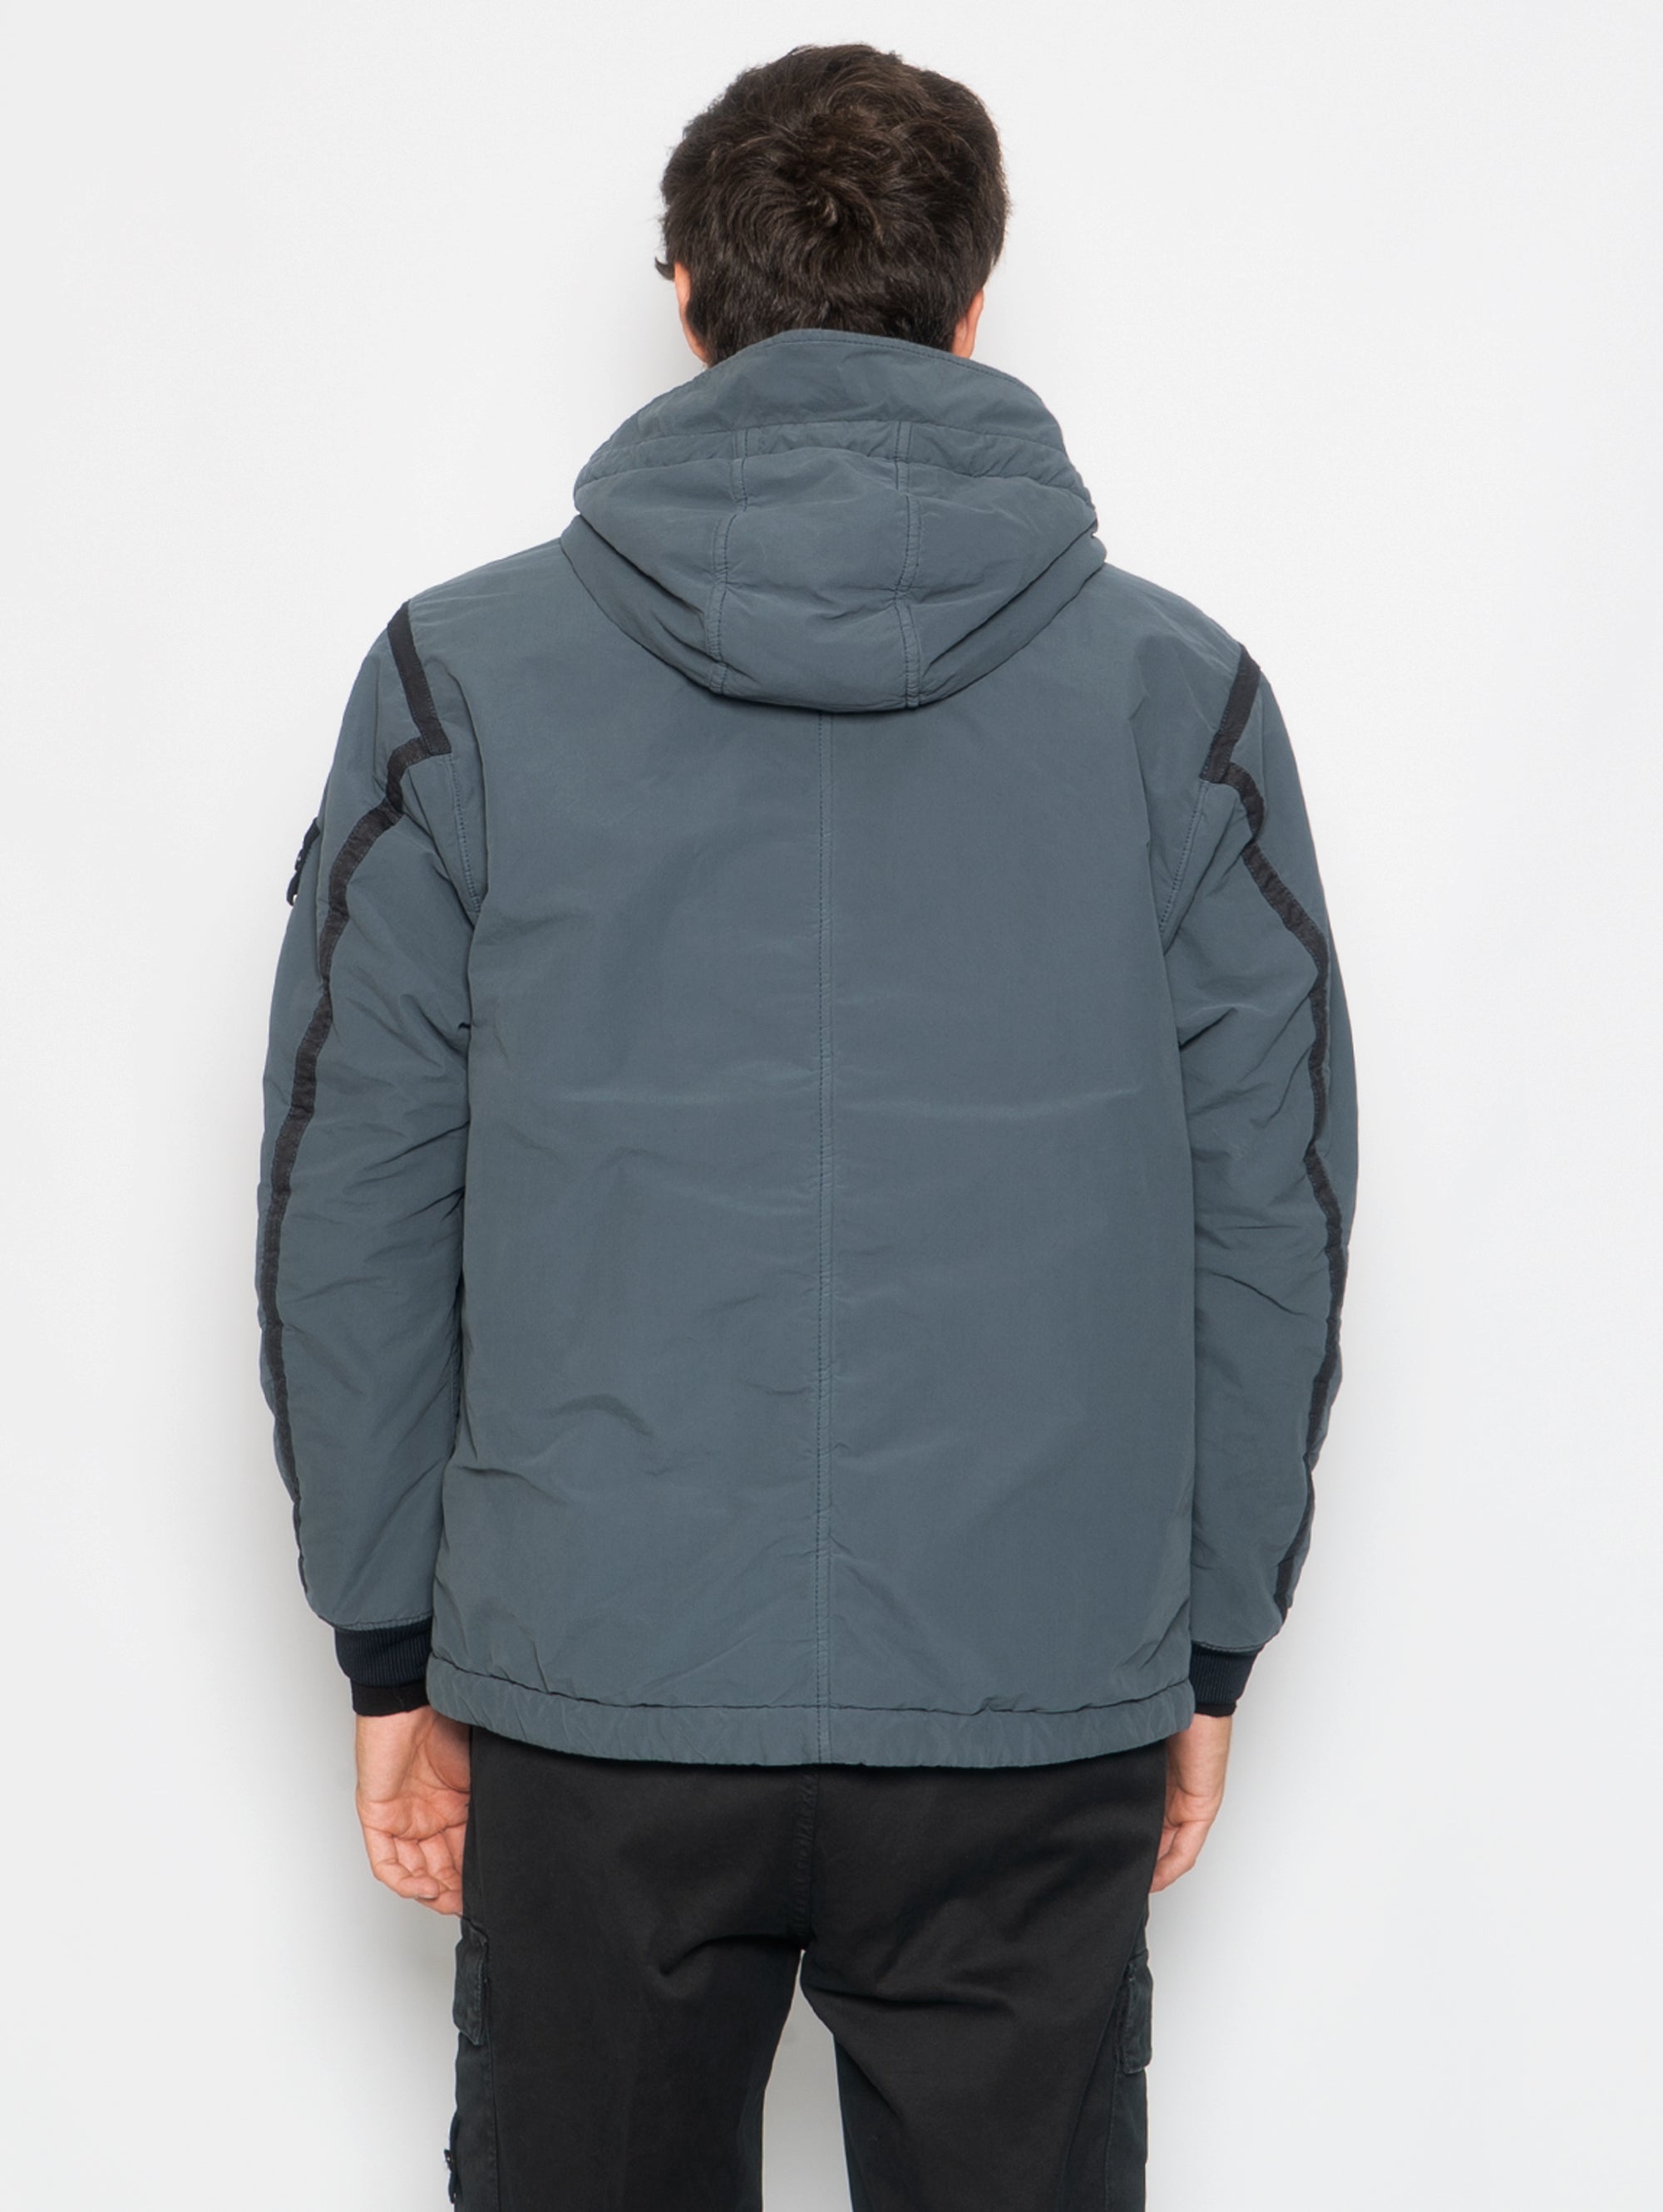 David Canvas Jacket with Gray Micro Fleece